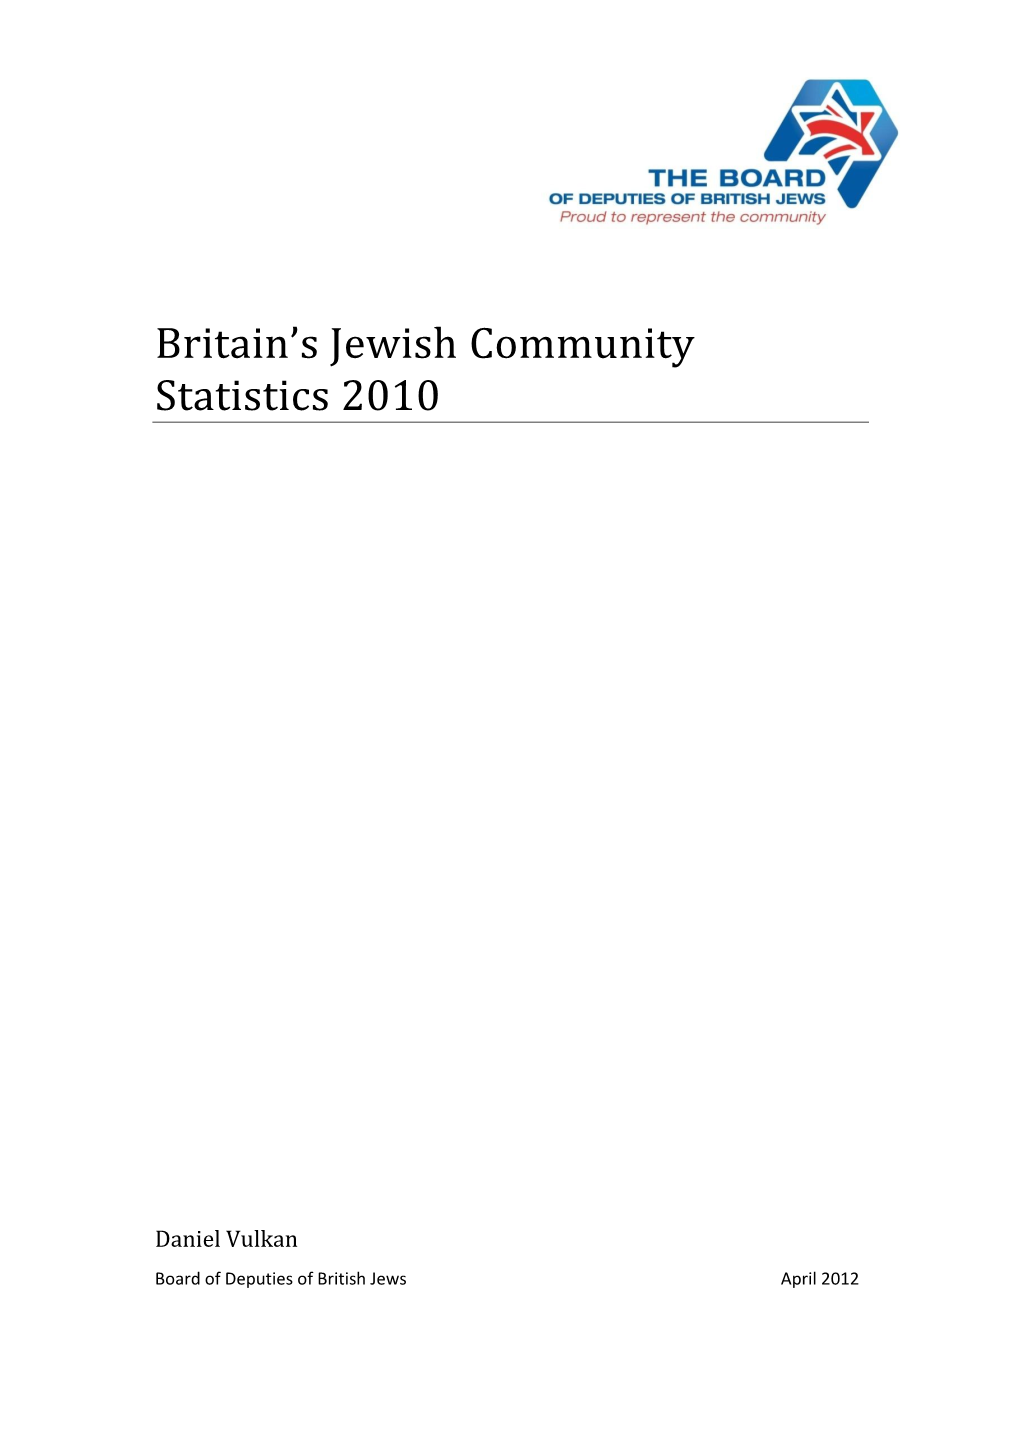 Britain's Jewish Community Statistics 2010